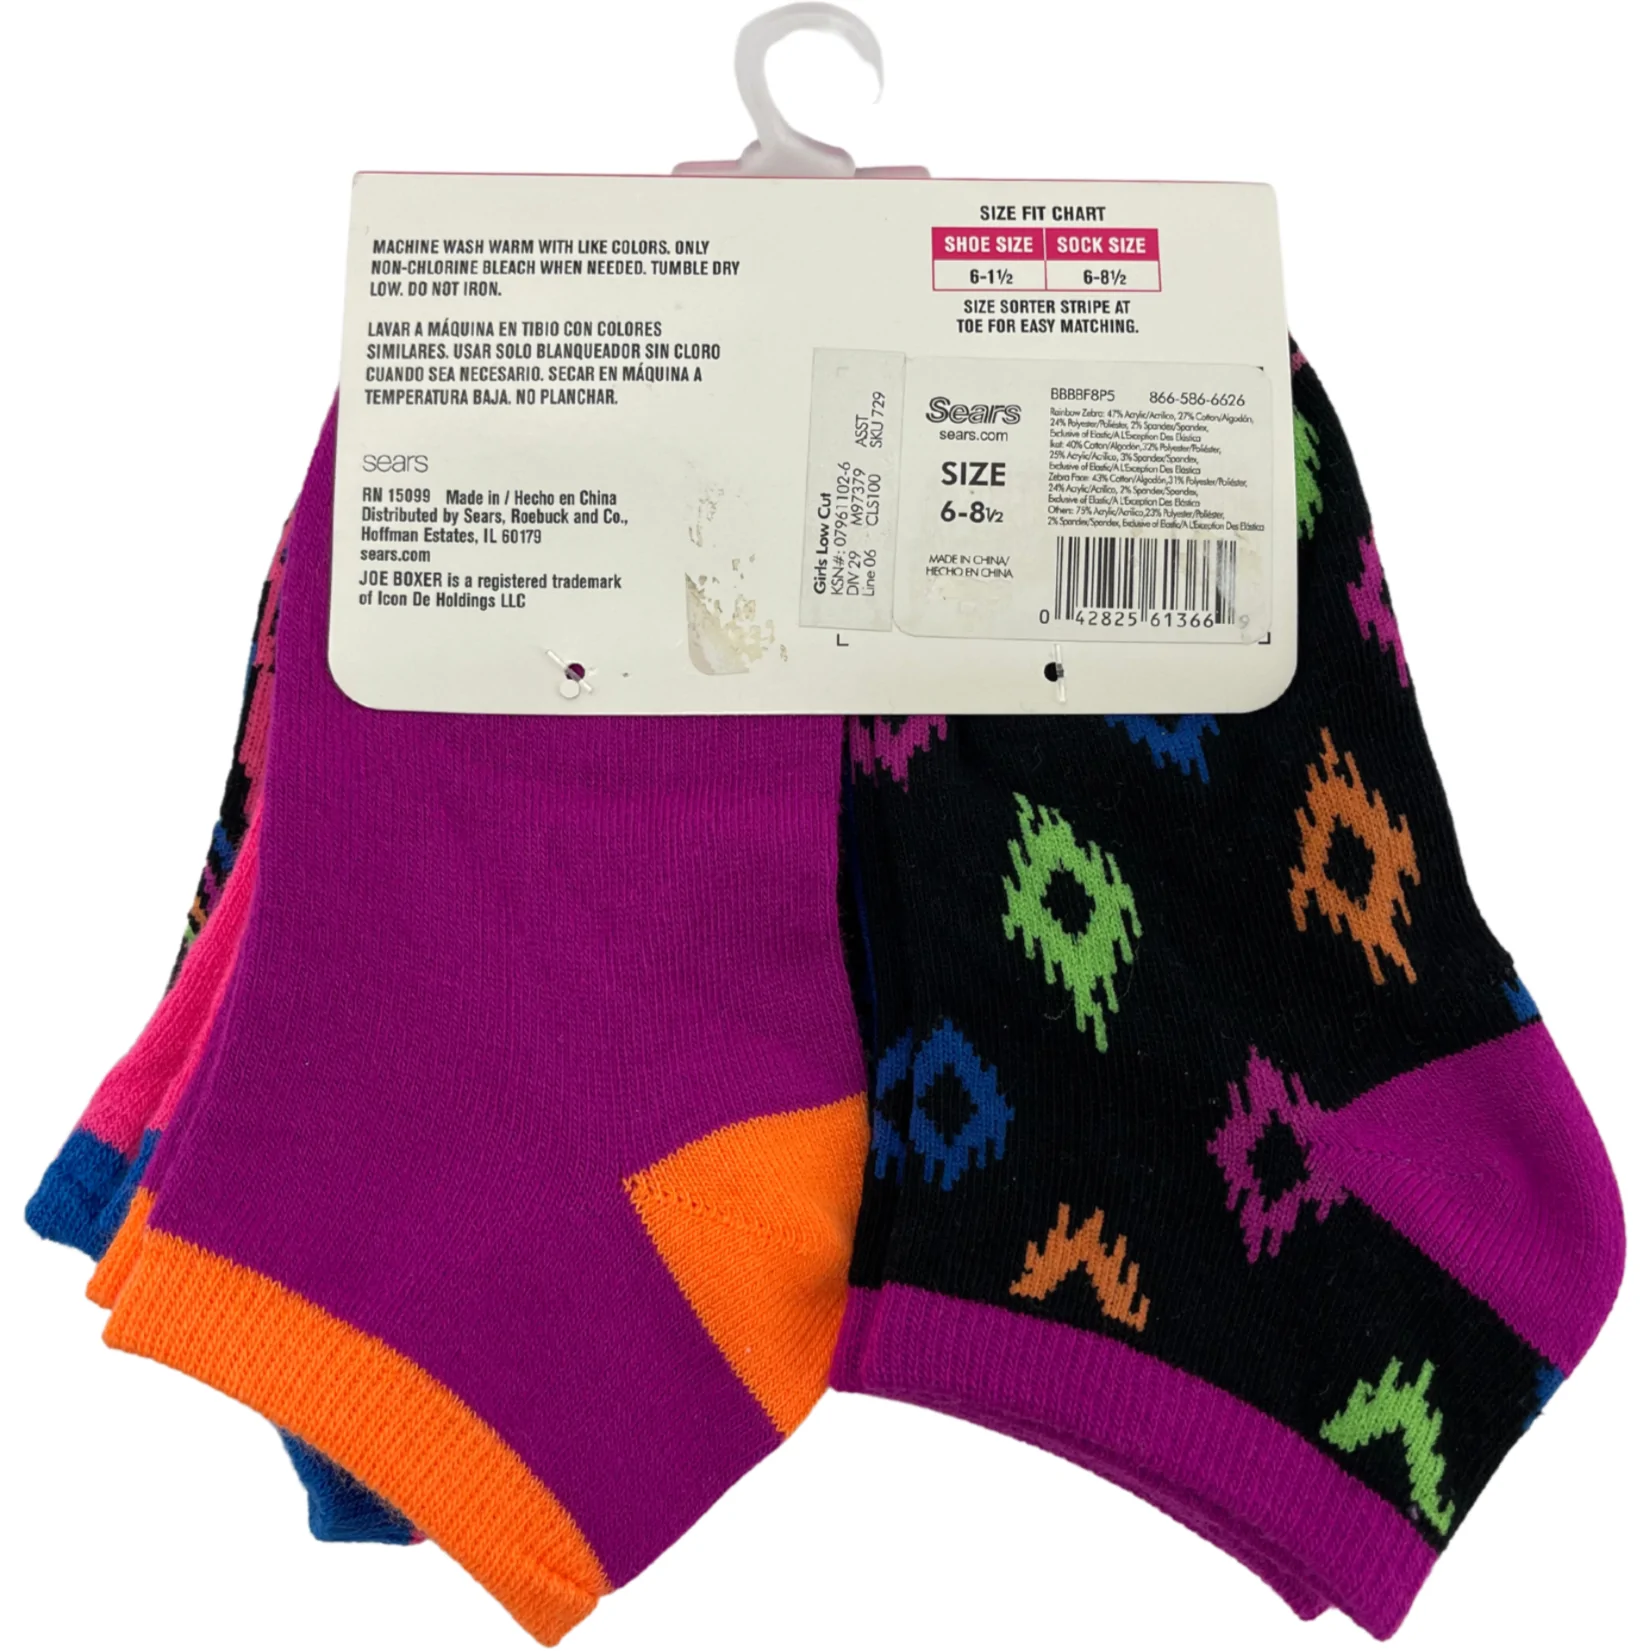 Joe Boxer Girl's Socks / Low Cut Socks / 6 Pack / Bright Colours / Shoe Size 6-1.5